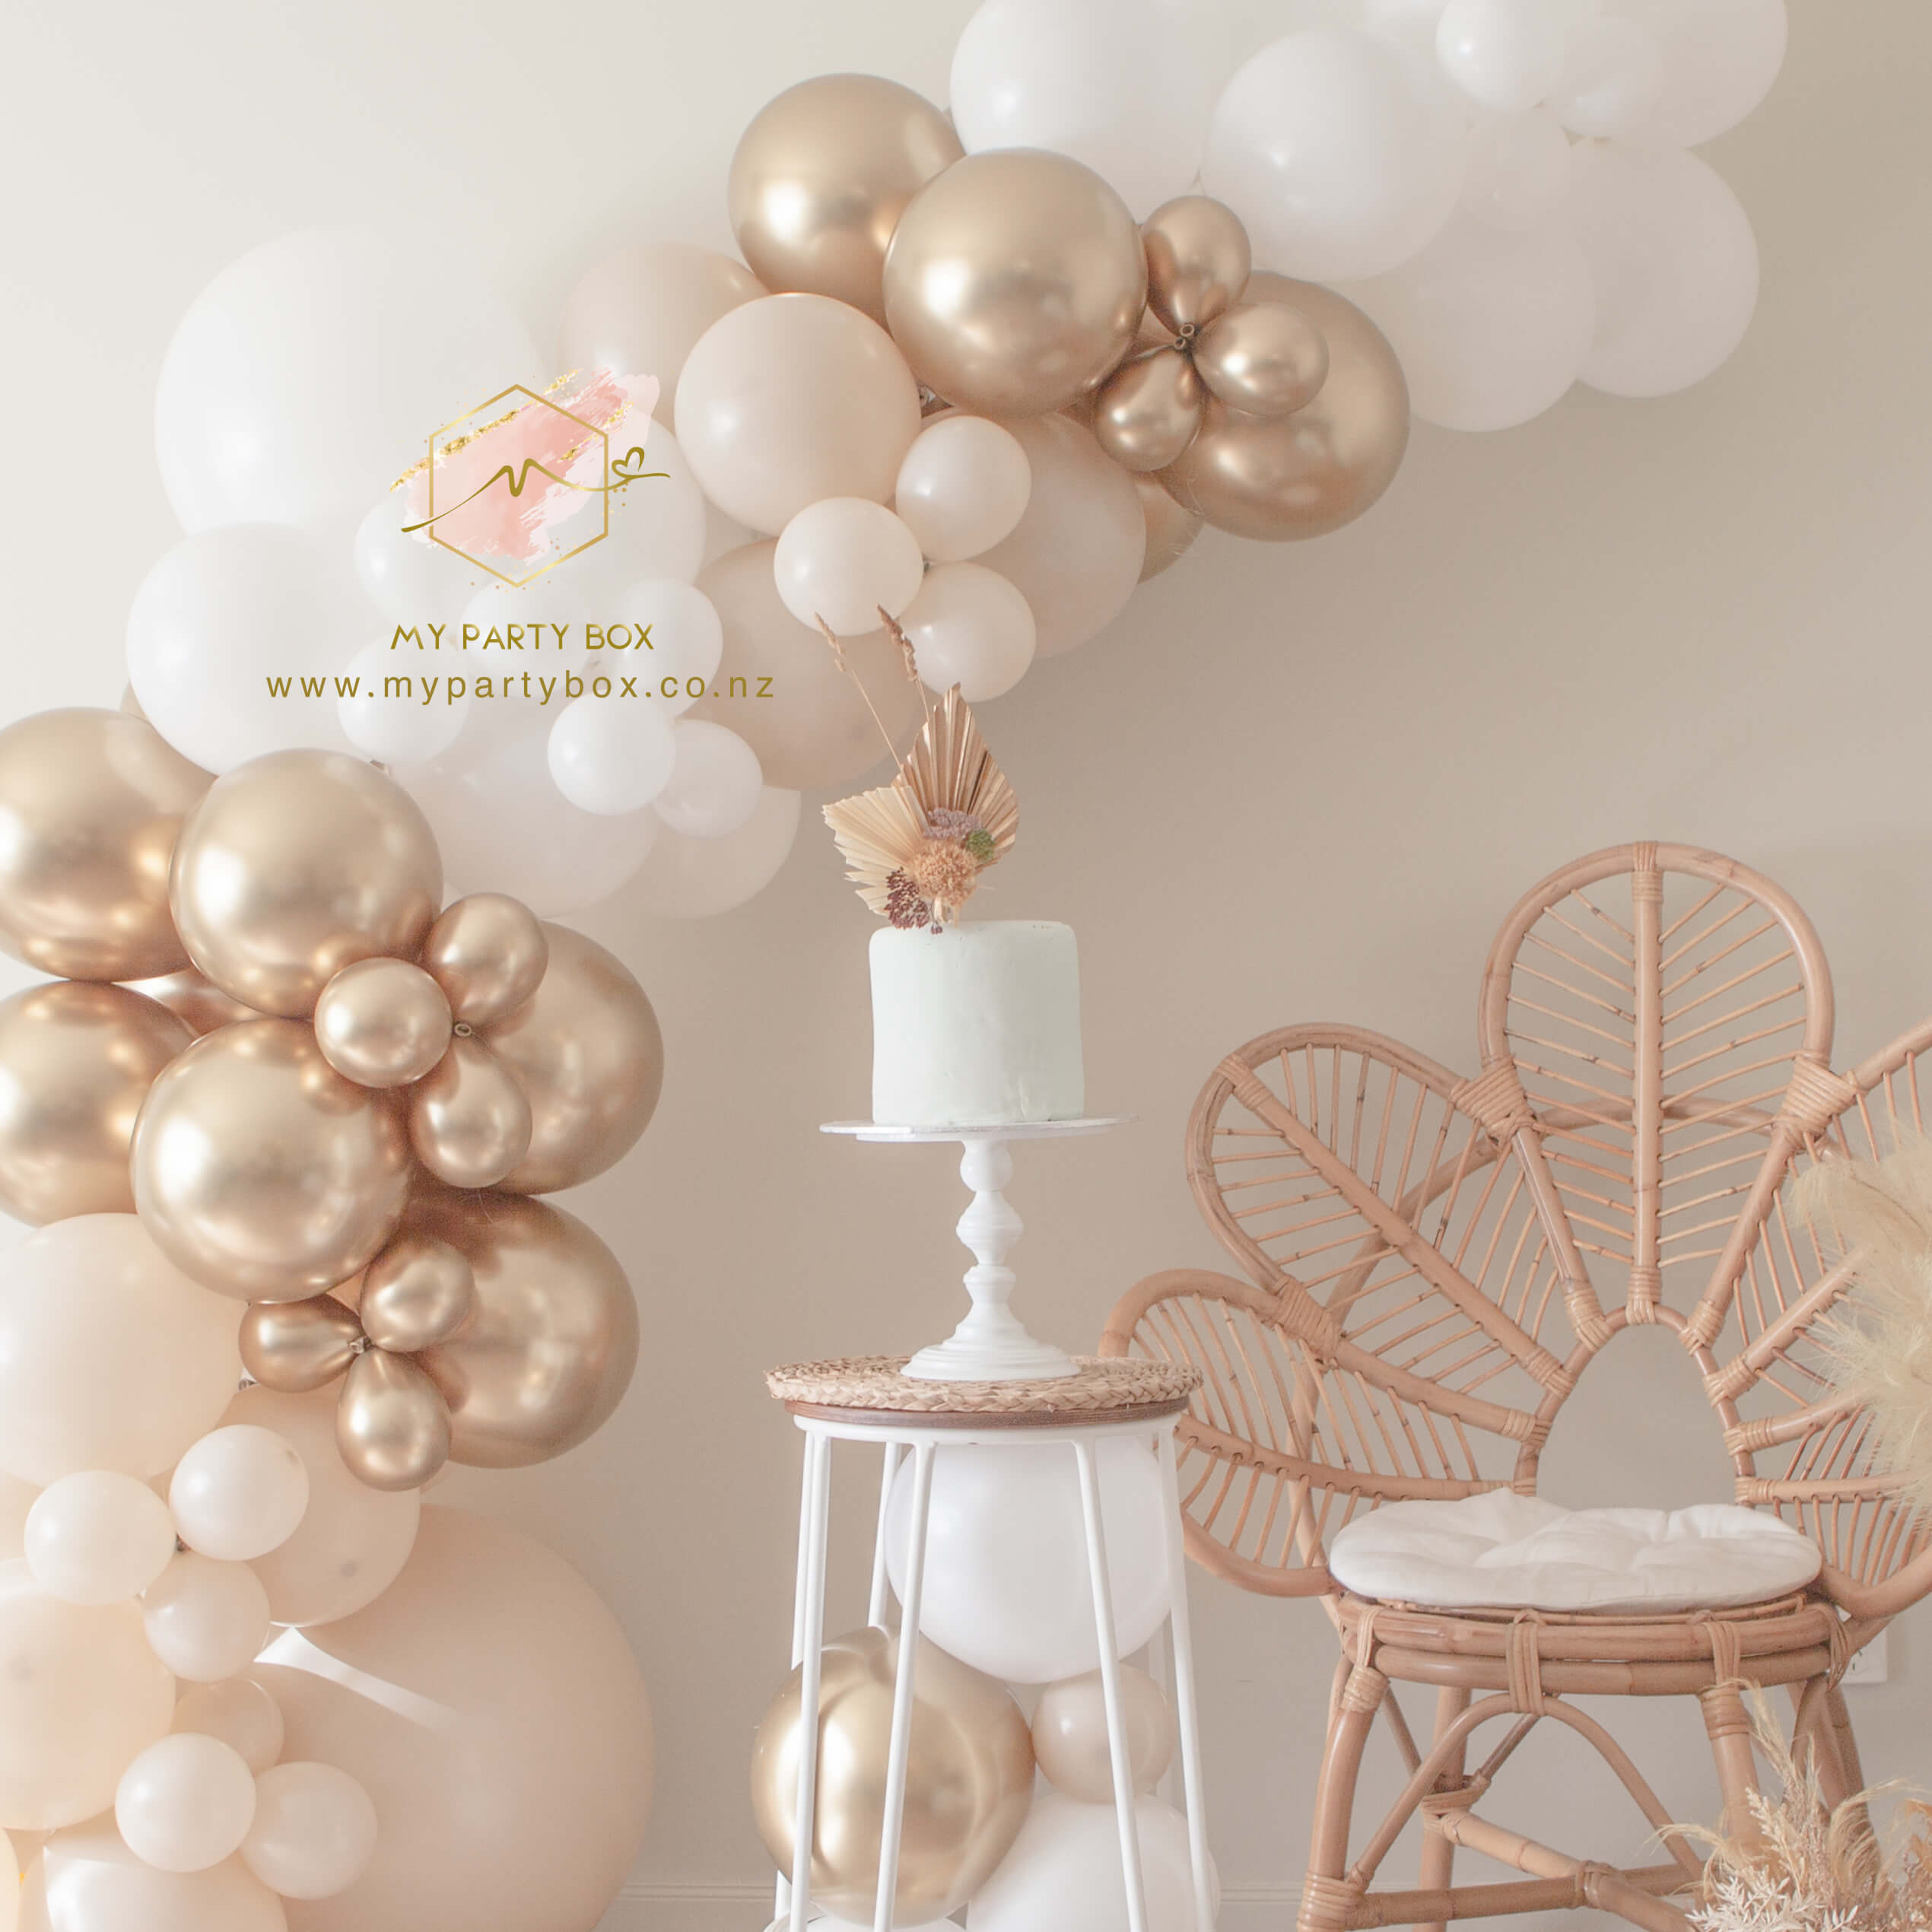 My Party Box Milestone Birthday Balloon Garland DIY Kit - Cream with White sand, Chrome Gold and white latex balloons